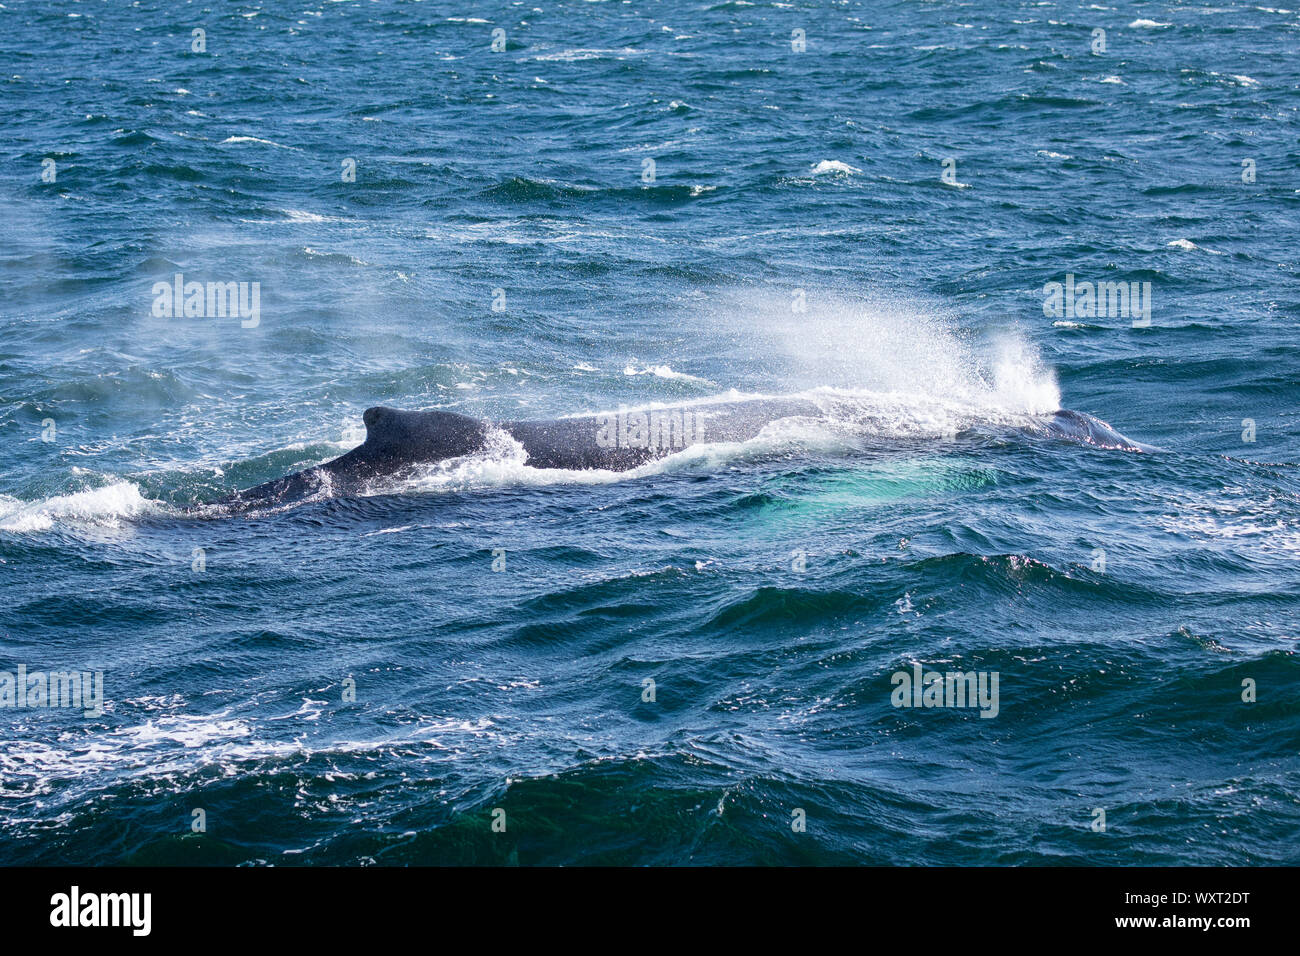 Humpback whale, Megaptera novaeangliae, in the North West Atlantic Ocean, Massachusetts, USA Stock Photo